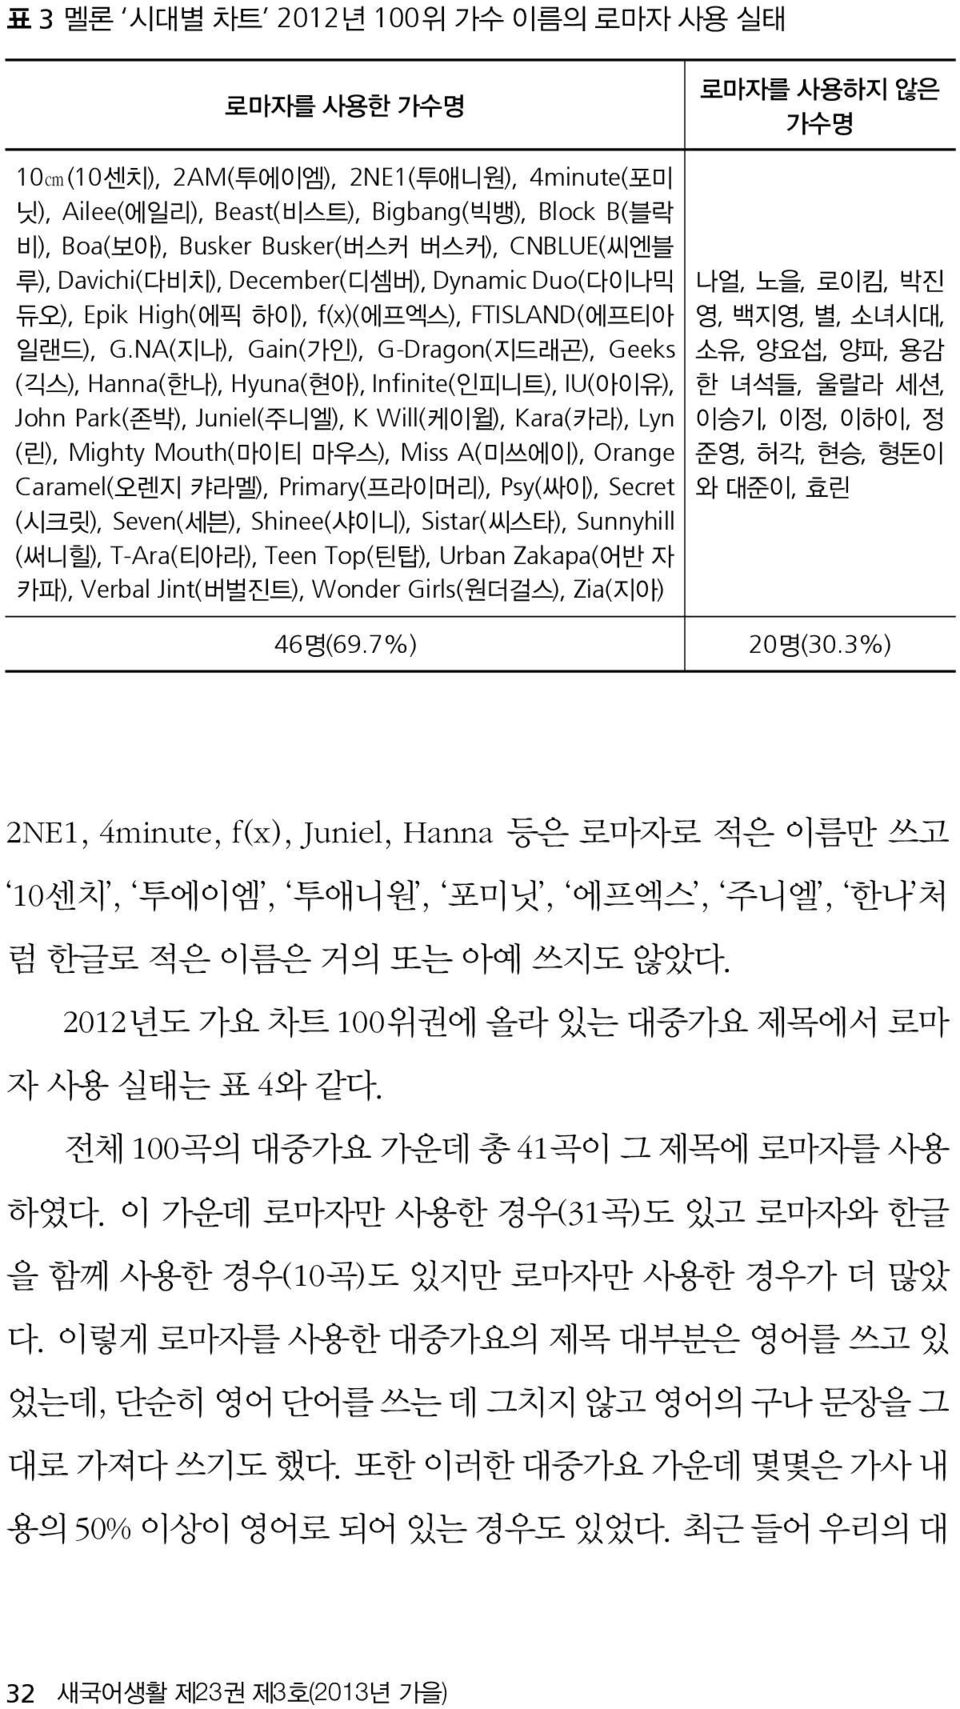 NA(지나), Gain(가인), G-Dragon(지드래곤), Geeks (긱스), Hanna(한나), Hyuna(현아), Infinite(인피니트), IU(아이유), John Park(존박), Juniel(주니엘), K Will(케이윌), Kara(카라), Lyn (린), Mighty Mouth(마이티 마우스), Miss A(미쓰에이), Orange